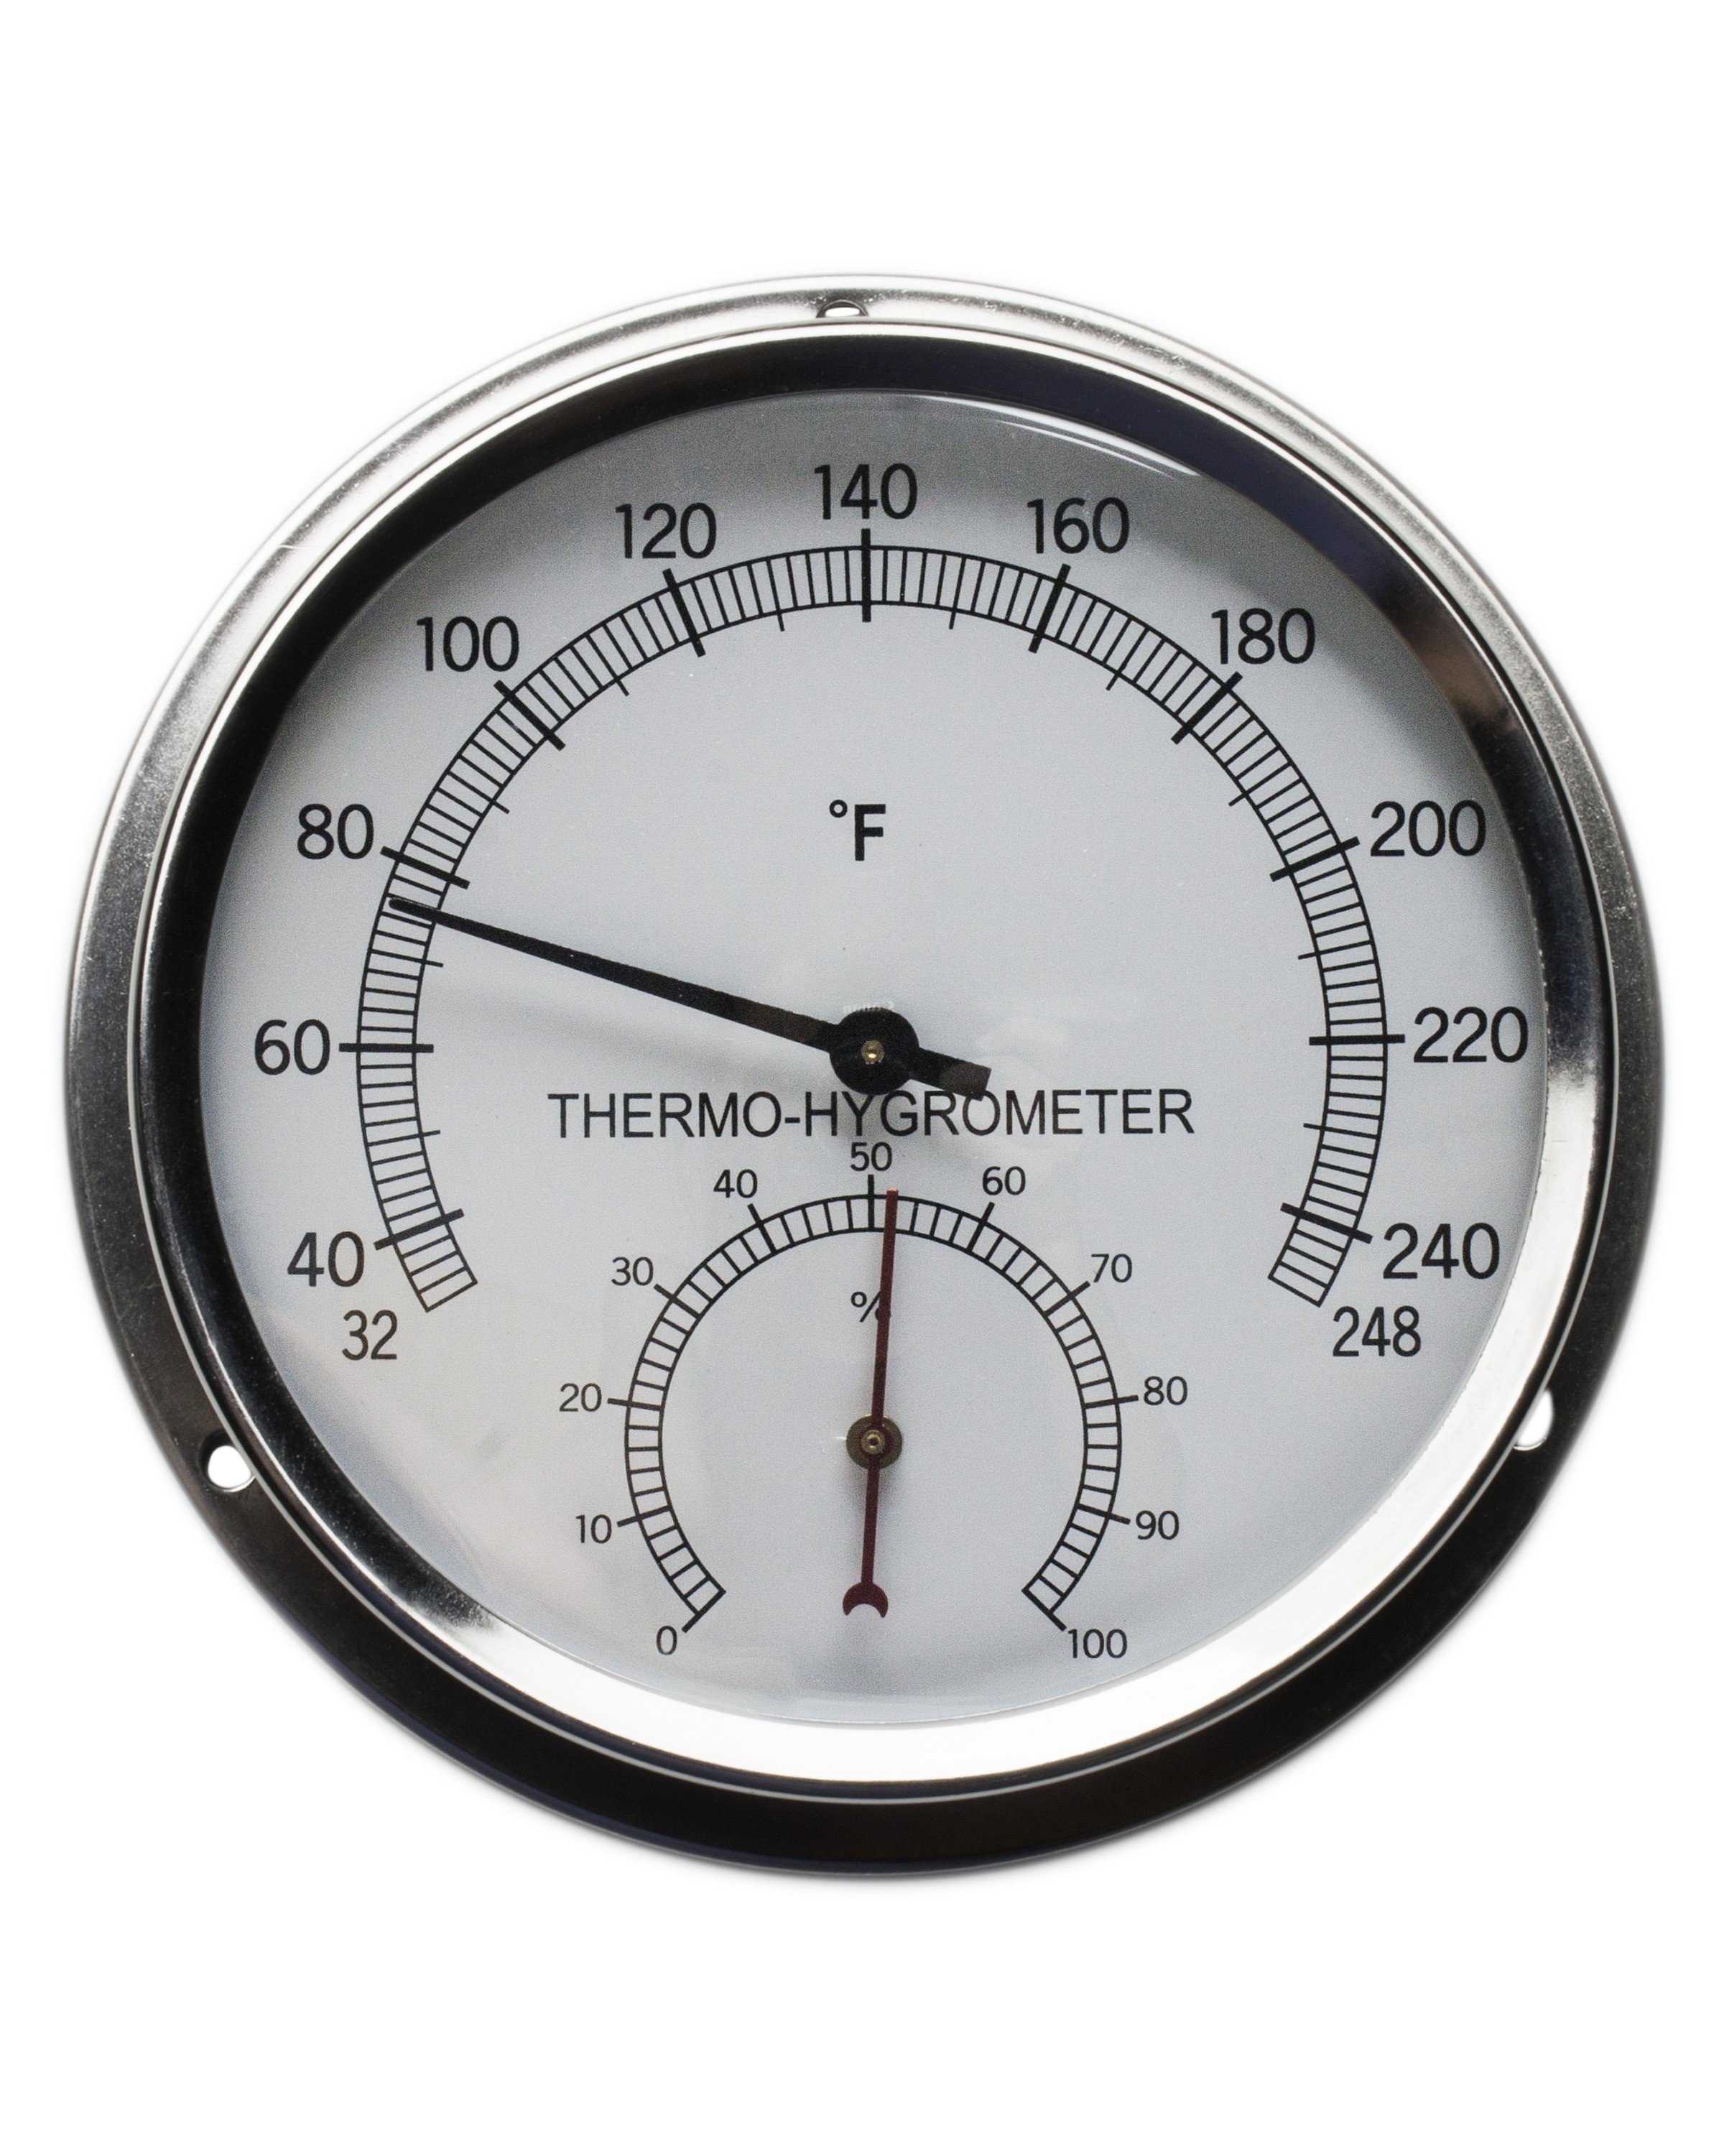 SP Bel-Art, H-B DURAC Thermometer-Hygrometer; 32/248F, 0/100 Percent Humidity Range, Stainless Steel